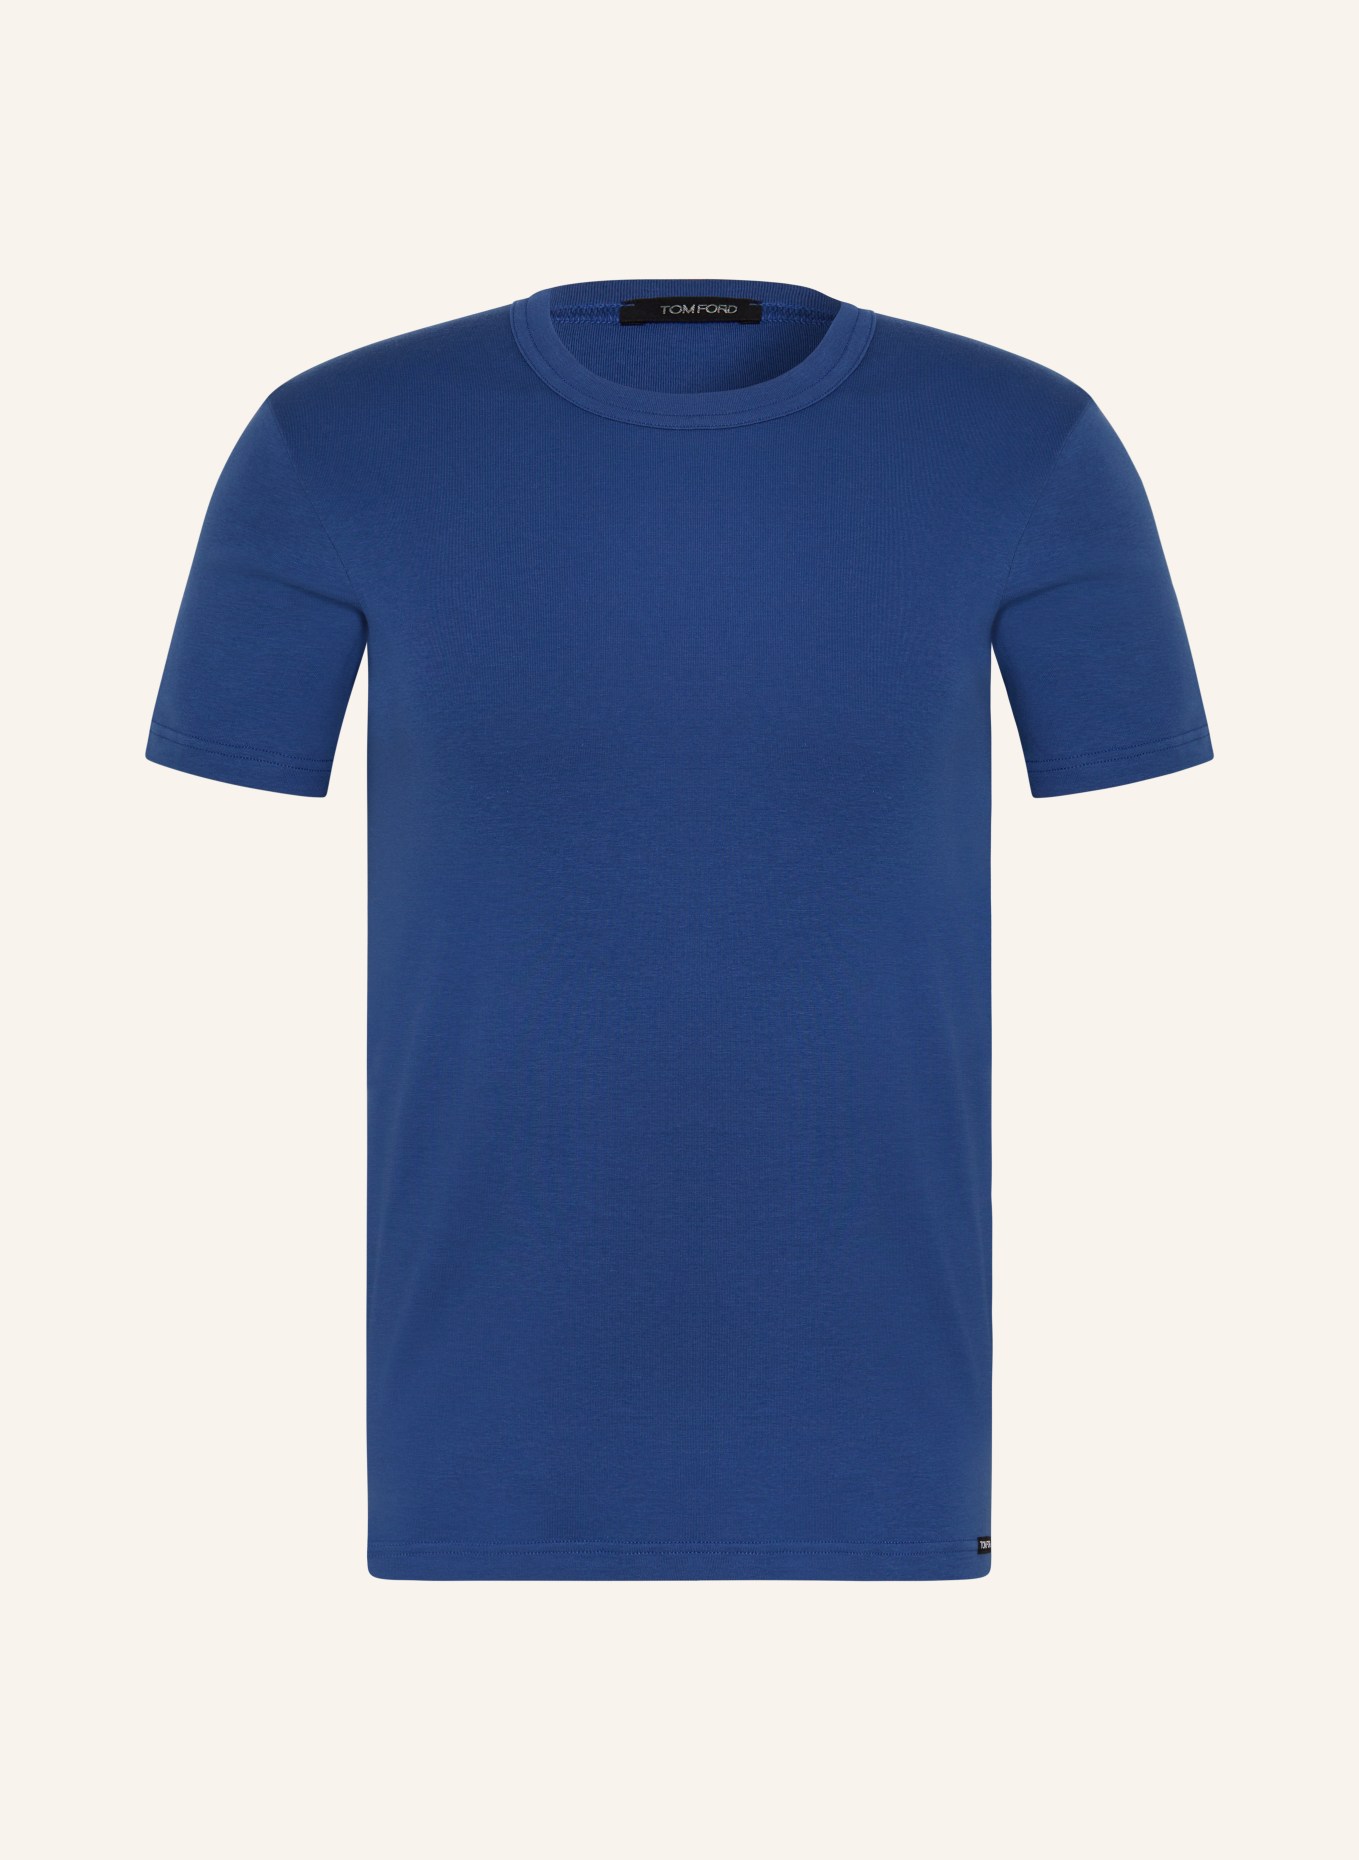 TOM FORD T-Shirt, Farbe: BLAU (Bild 1)